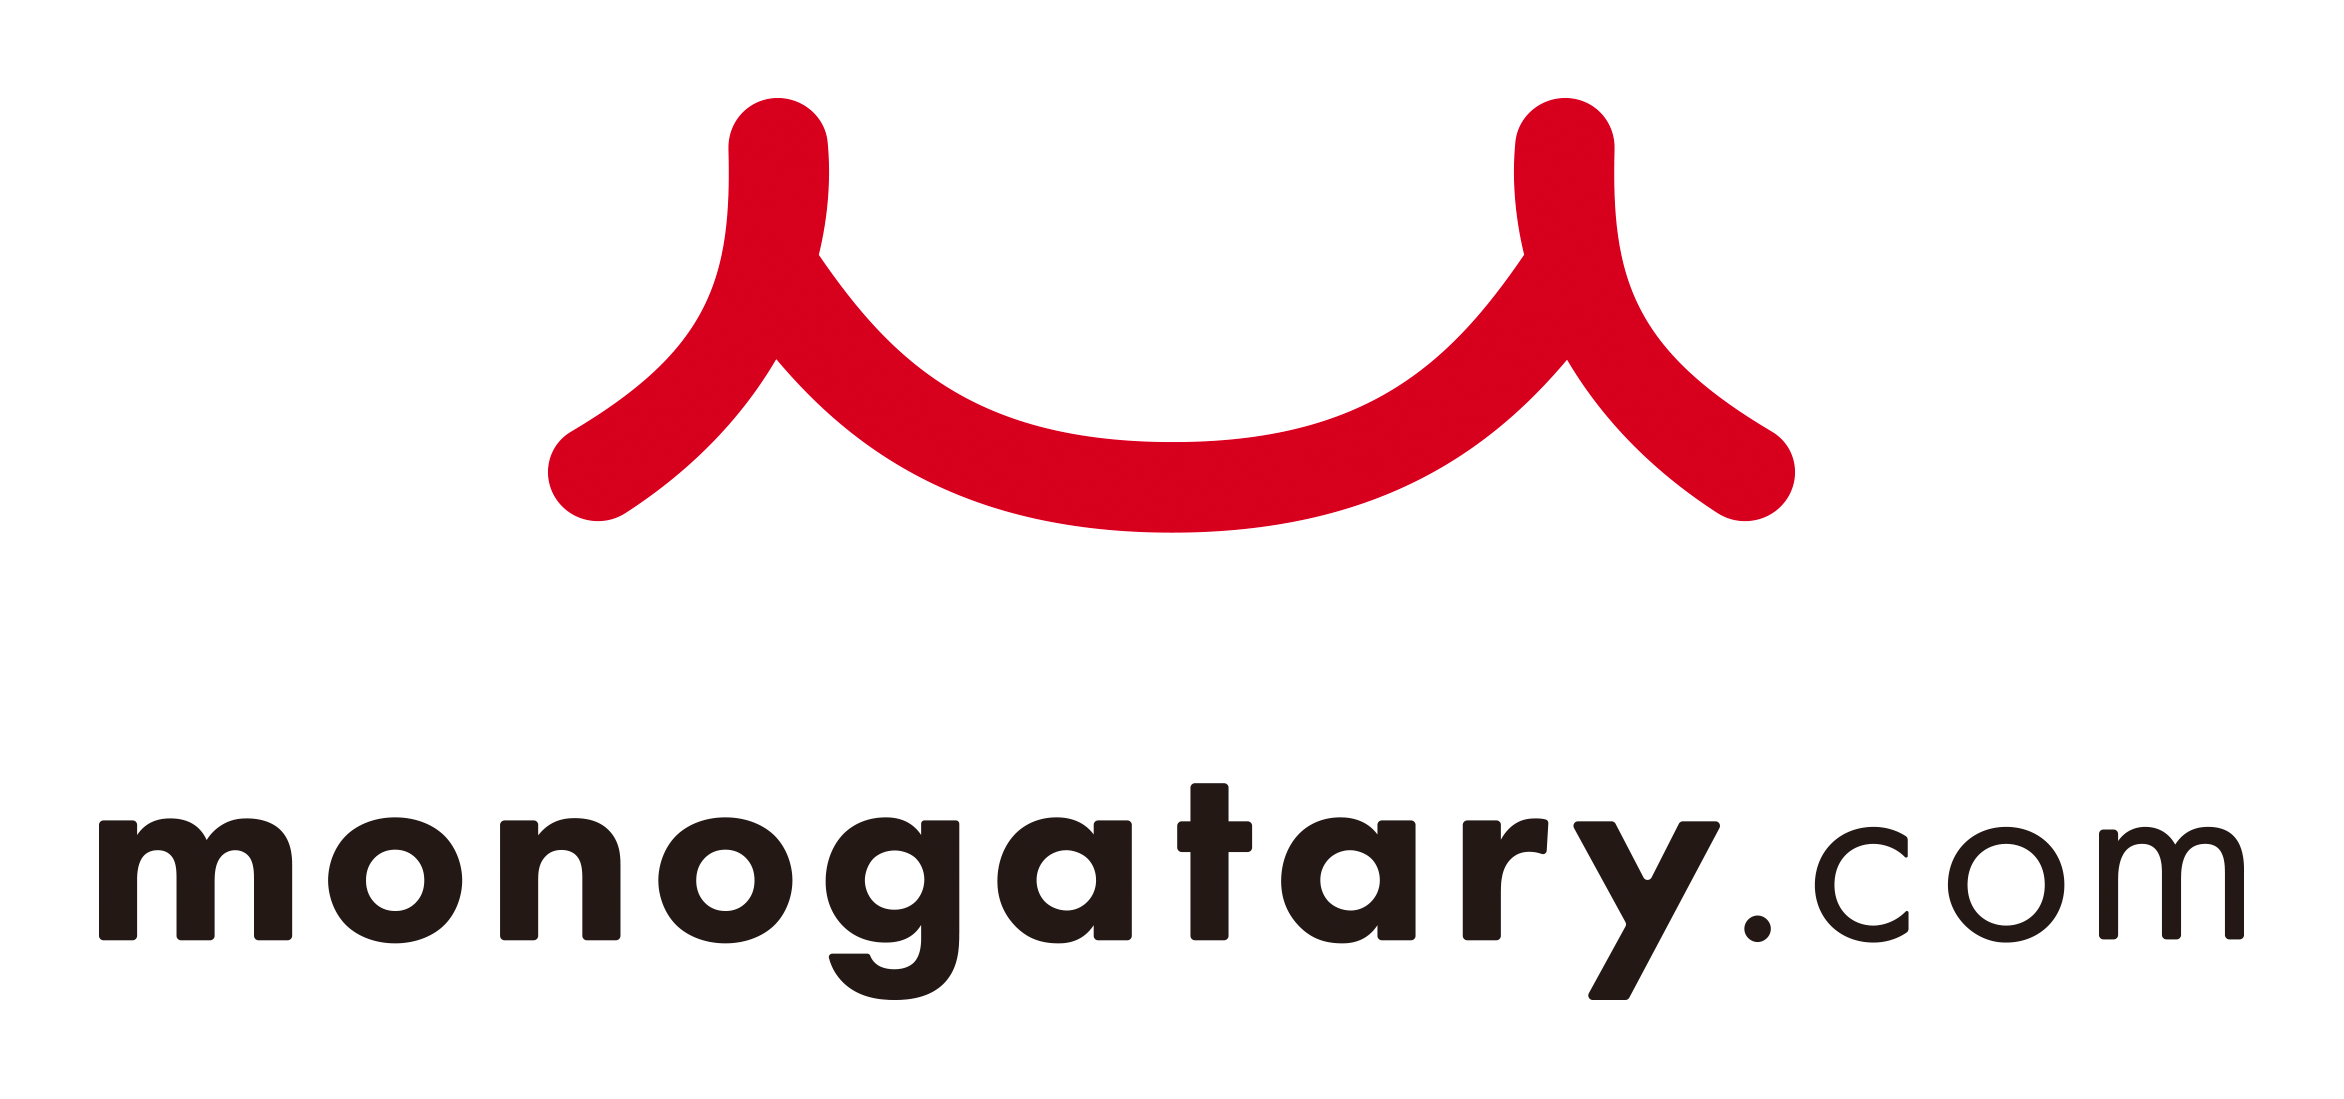 YOASOBImonogatary.comłȂꂽuY~monogatary.comR{܁v܍ȉHyȉIN[gCMȂƂċNpI